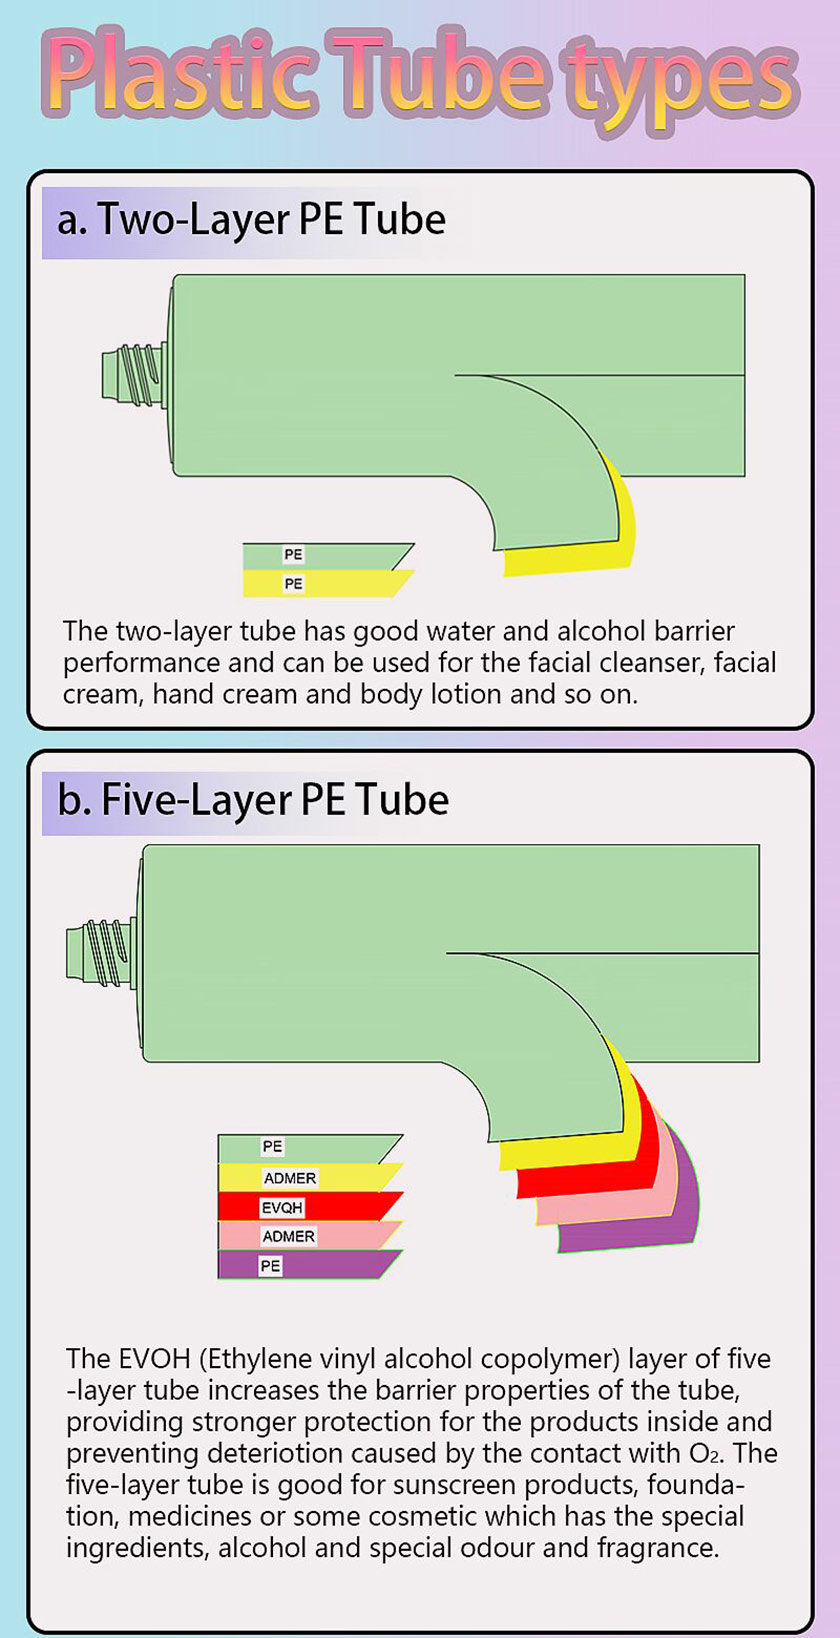 Large PE tube 100-400ml (5)